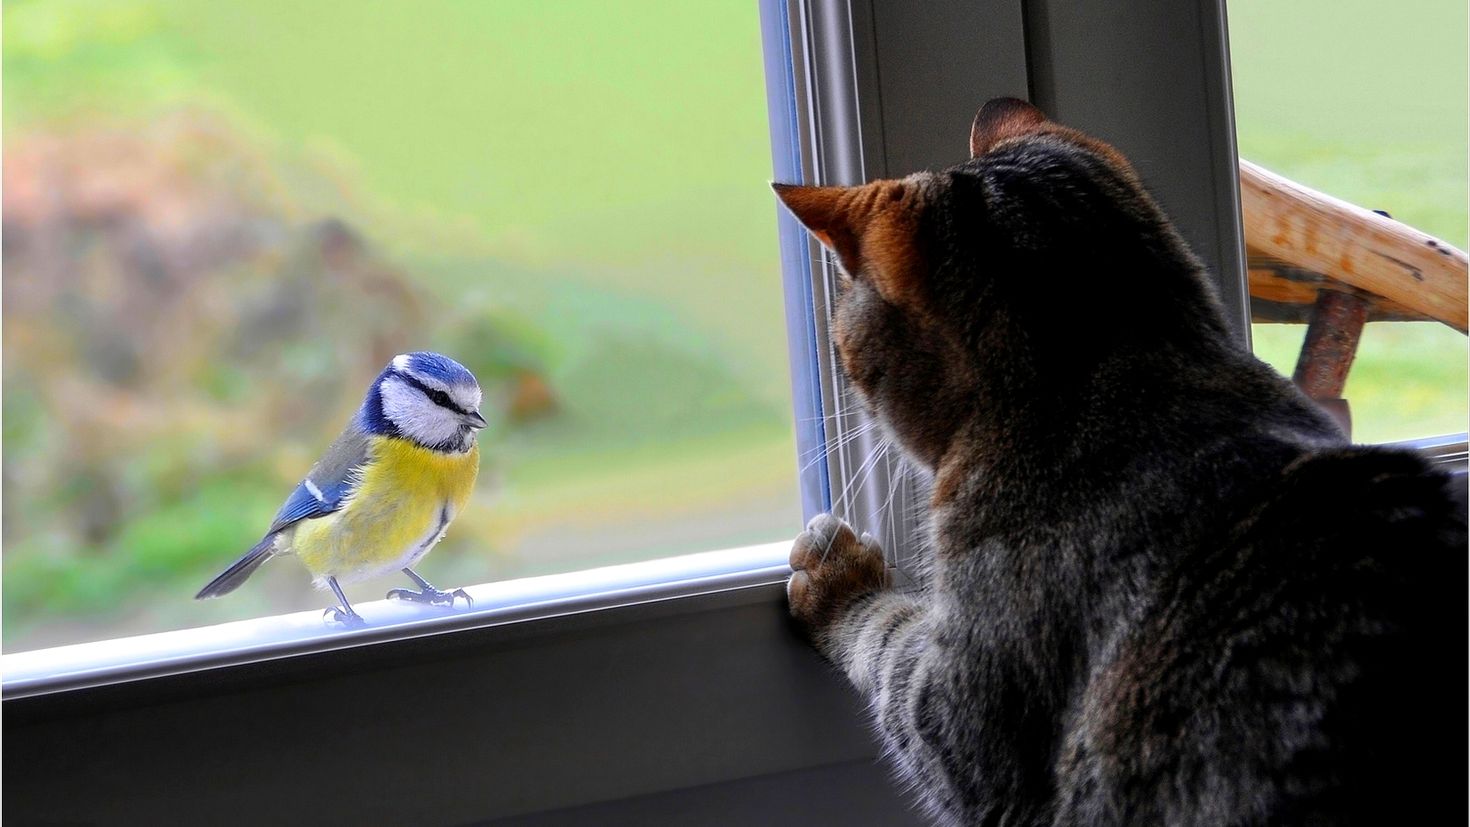 Синица на балкон. Птички на окна. Птица на подоконнике. Синица на балконе примета. Синица птица прилетела на балкон примета.